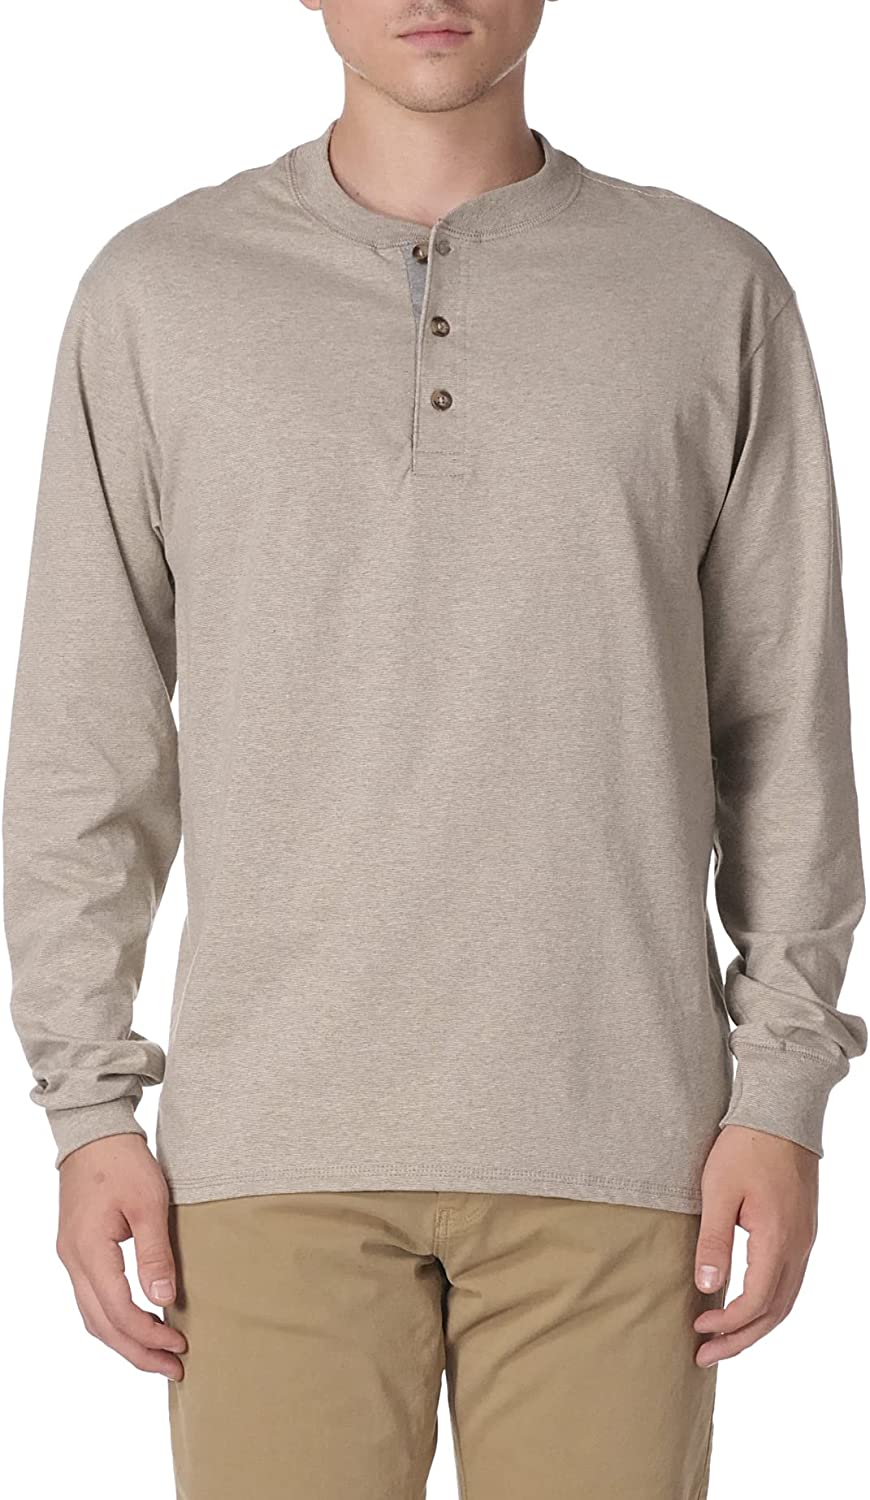 Hanes Men's T-Shirts, Men's BeefyT Henley Shirts, Men's Cotton Long Sleeve  Shirt